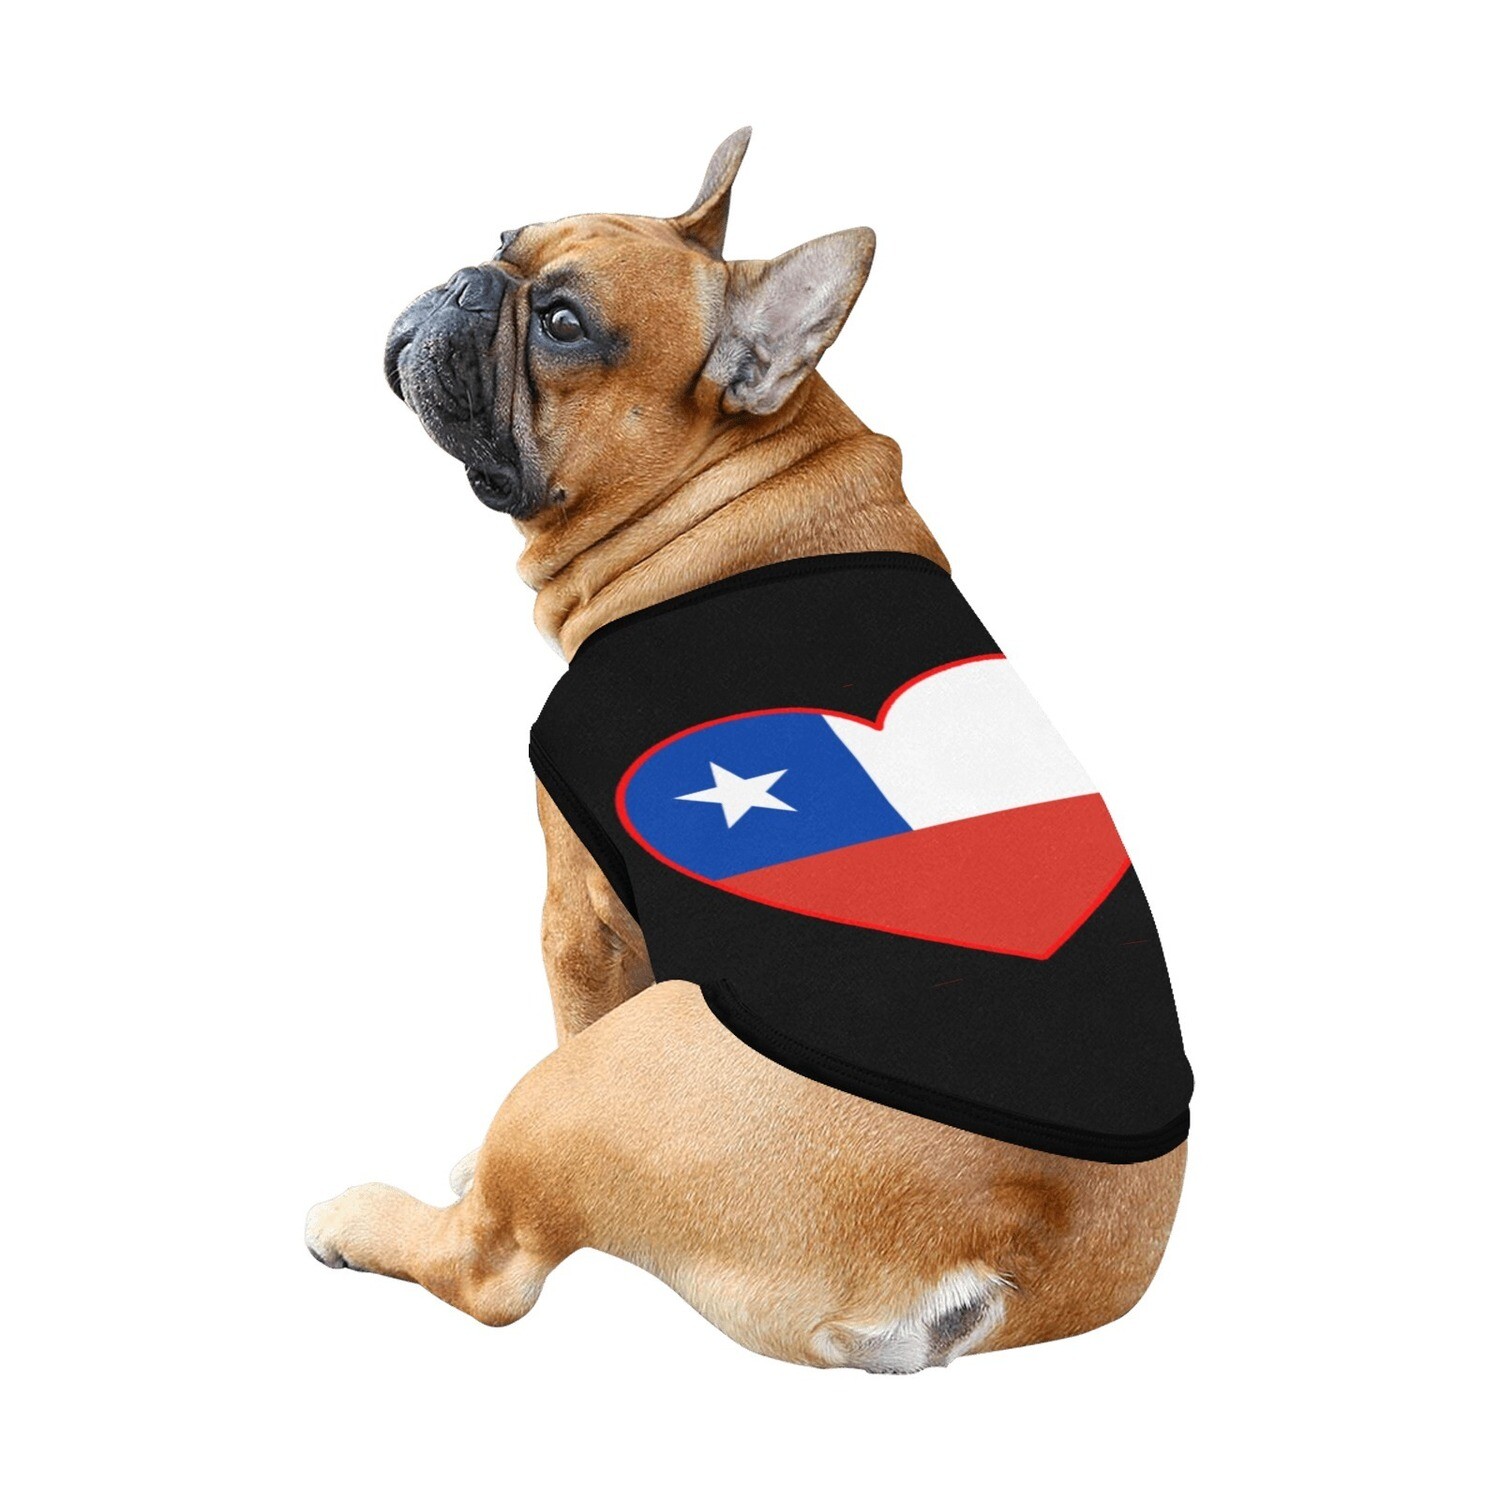 🐕🇨🇱 I love Chile dog t-shirt, dog gift, dog tank top, dog shirt, dog clothes, gift, 7 sizes XS to 3XL, Chilean flag, heart shape, black